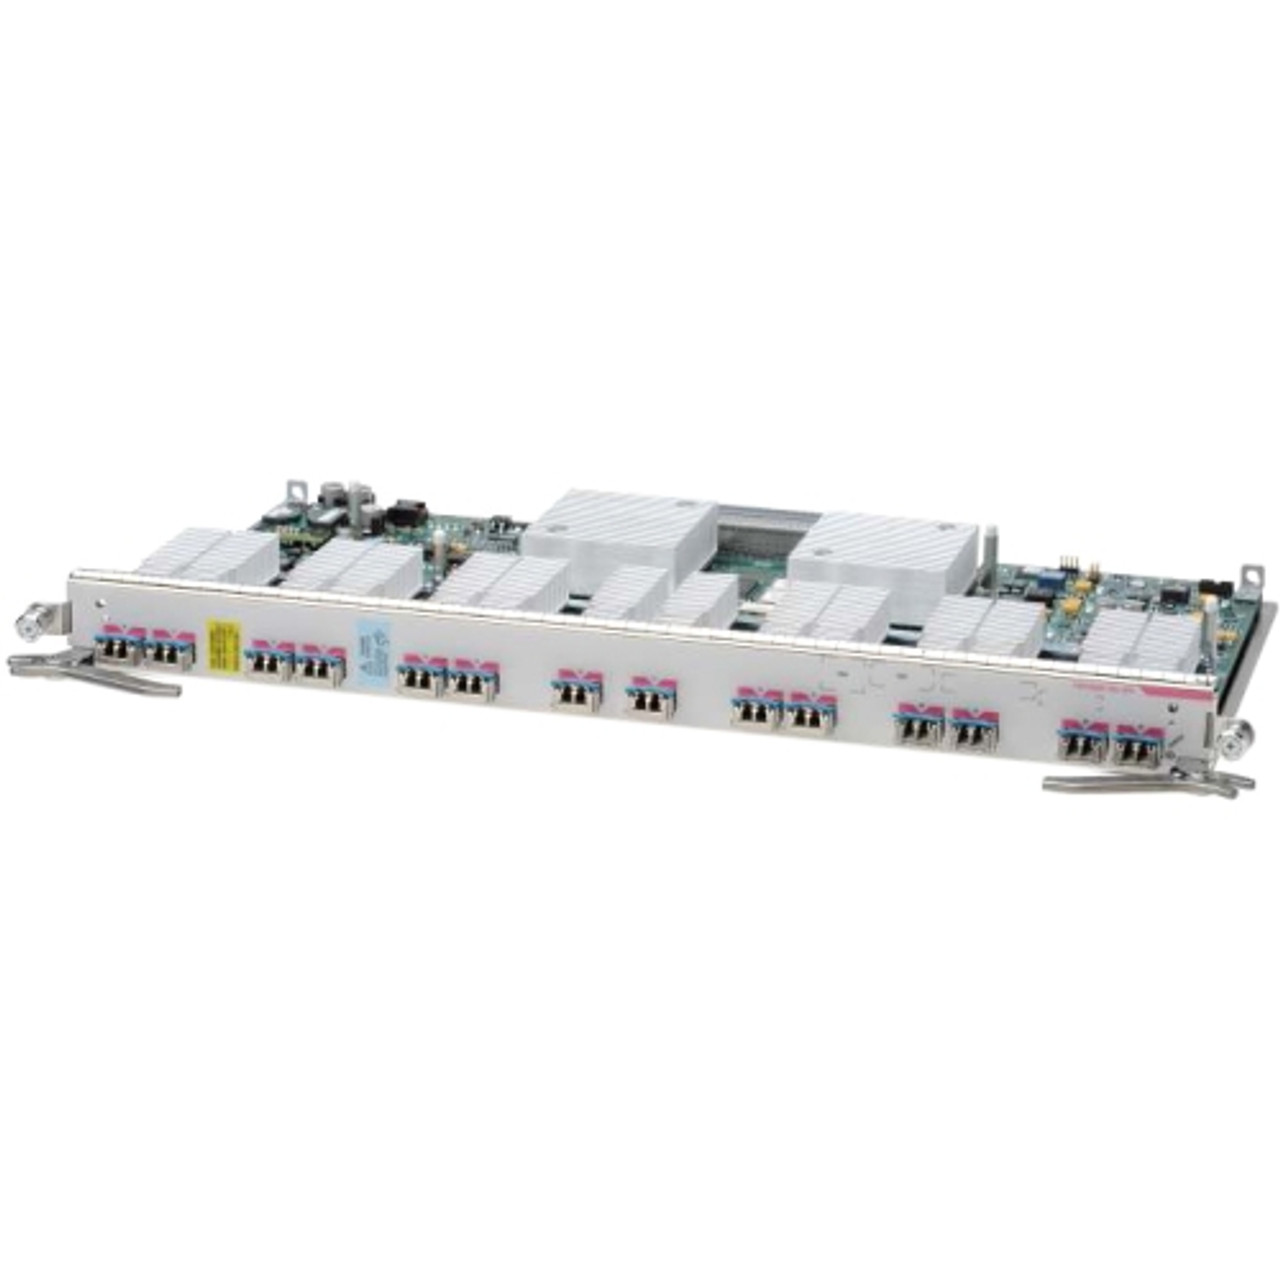 14X10GBE-WL-XFP Cisco CRS-3 14-Ports 10GbE LAN/WAN-PHY Interface Module (Refurbished)